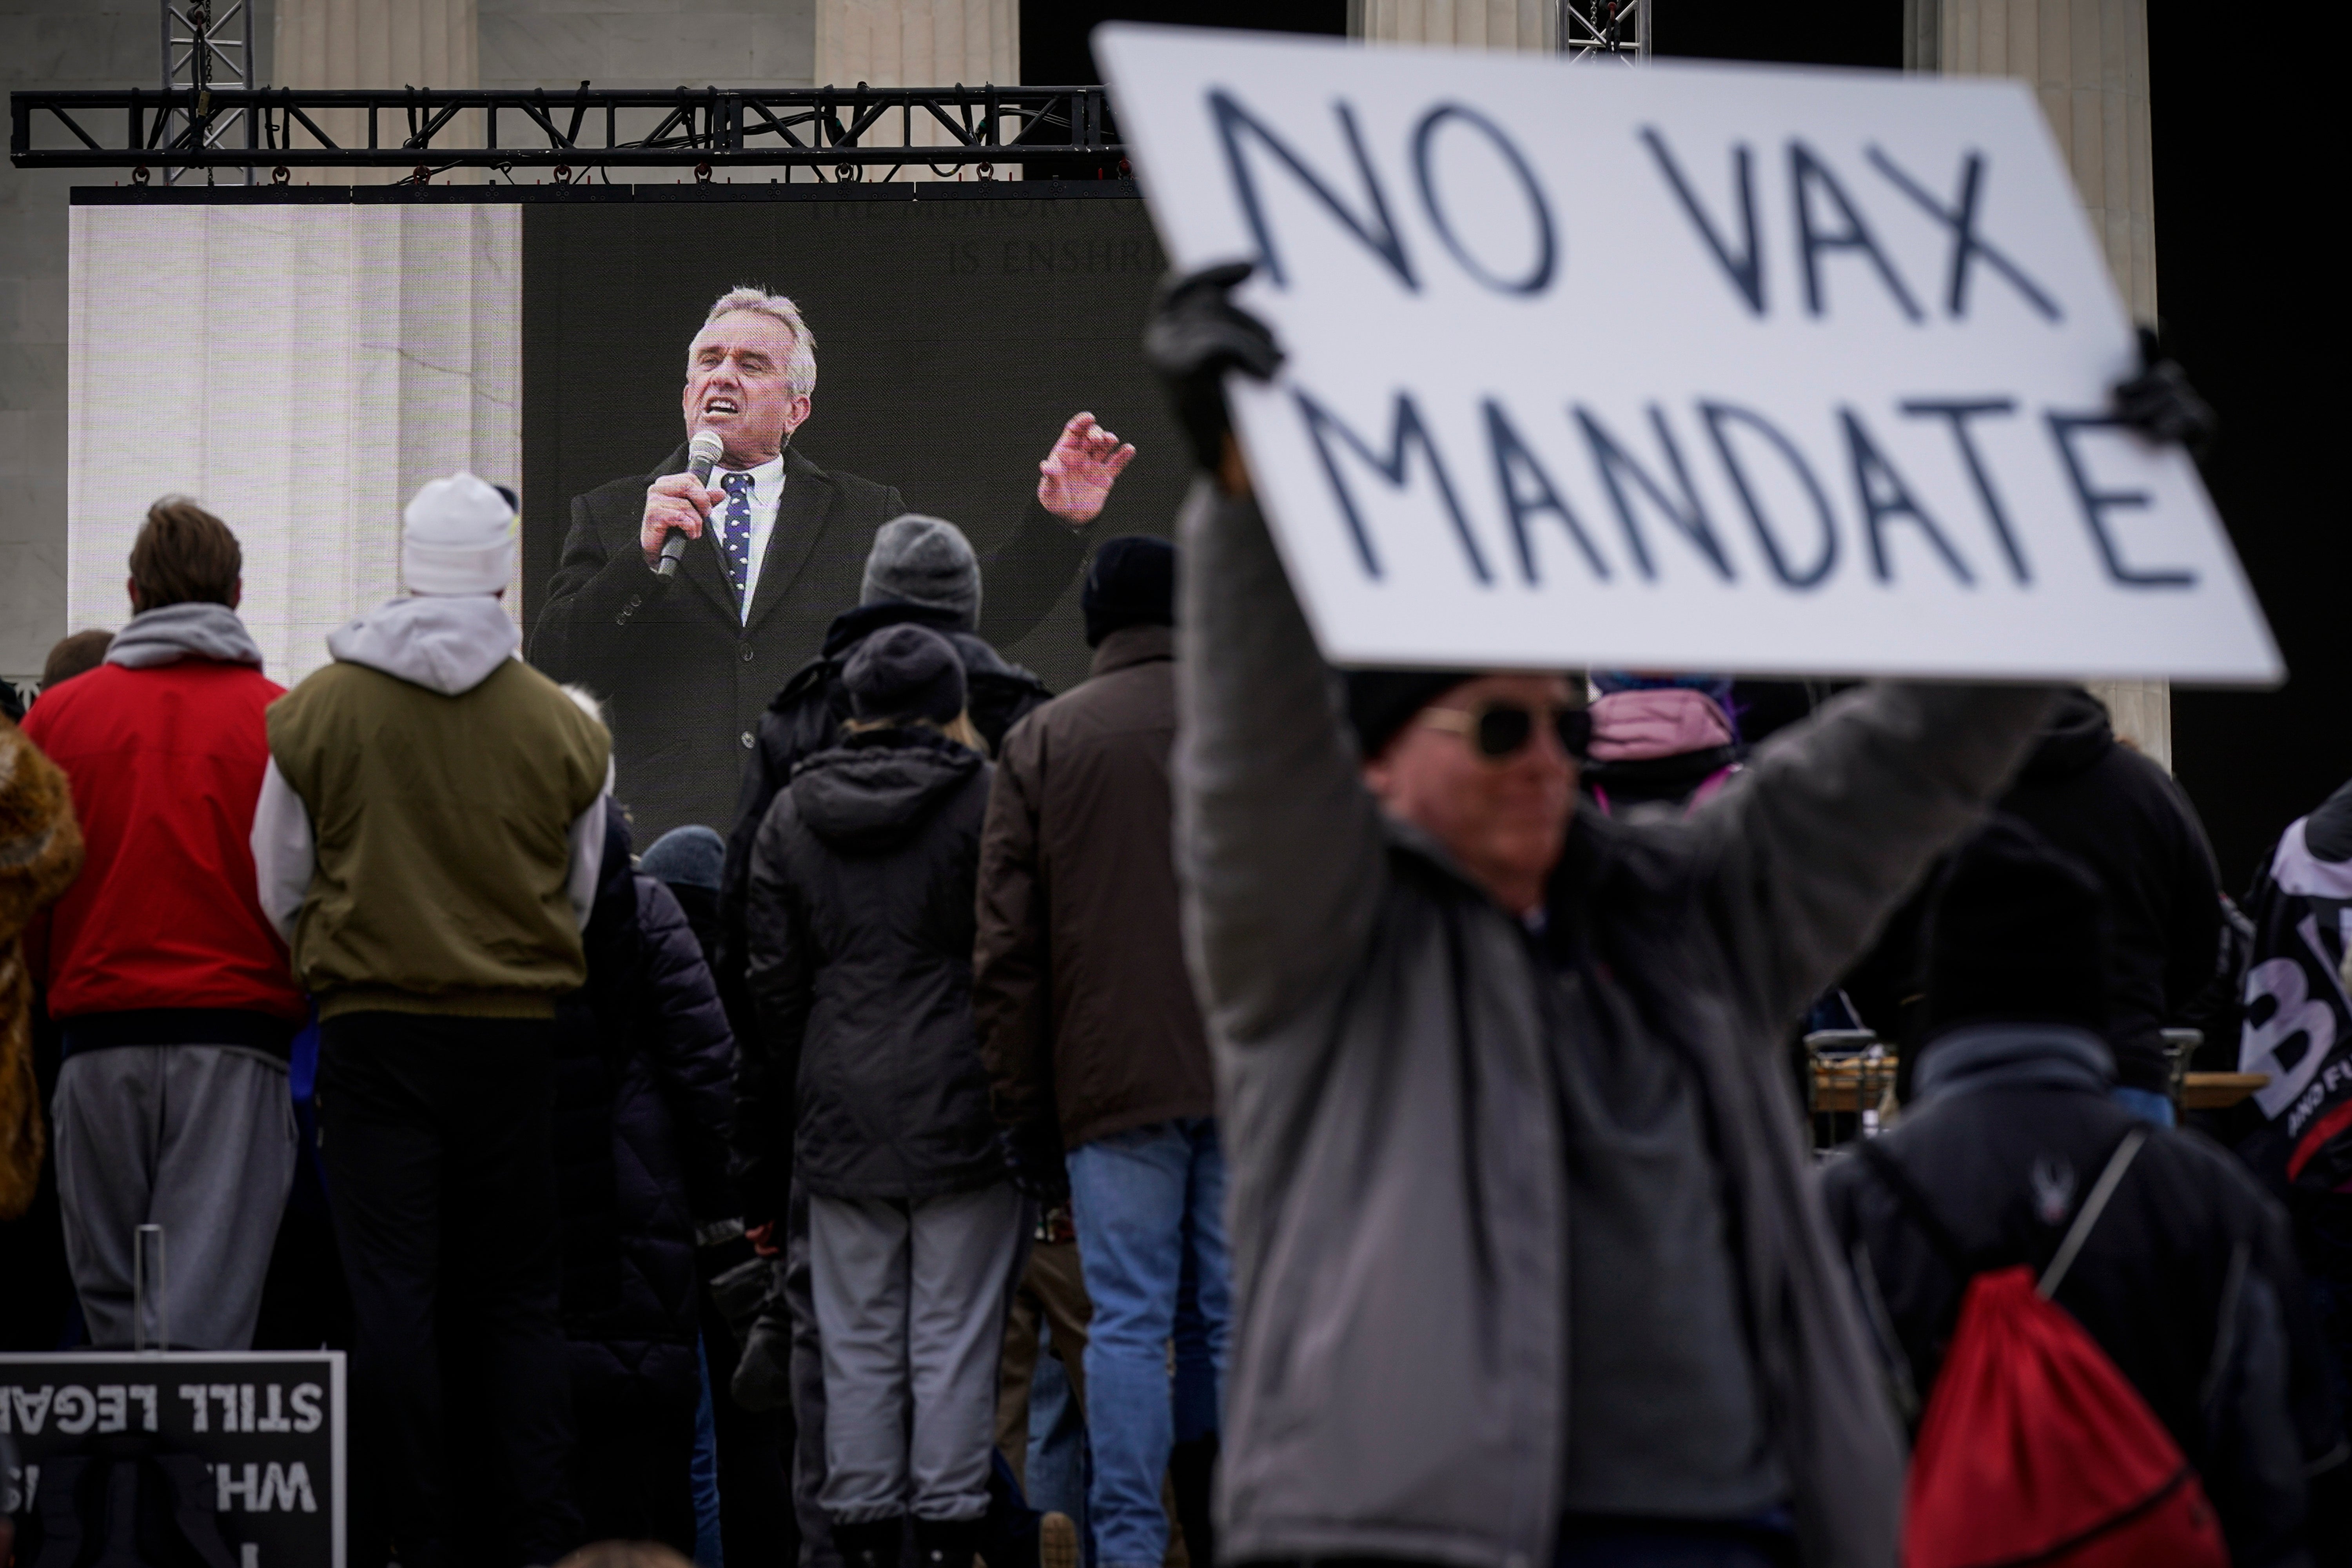 Kennedy Jr at an anti-vax mandates demonstration in Washington DC in 2022